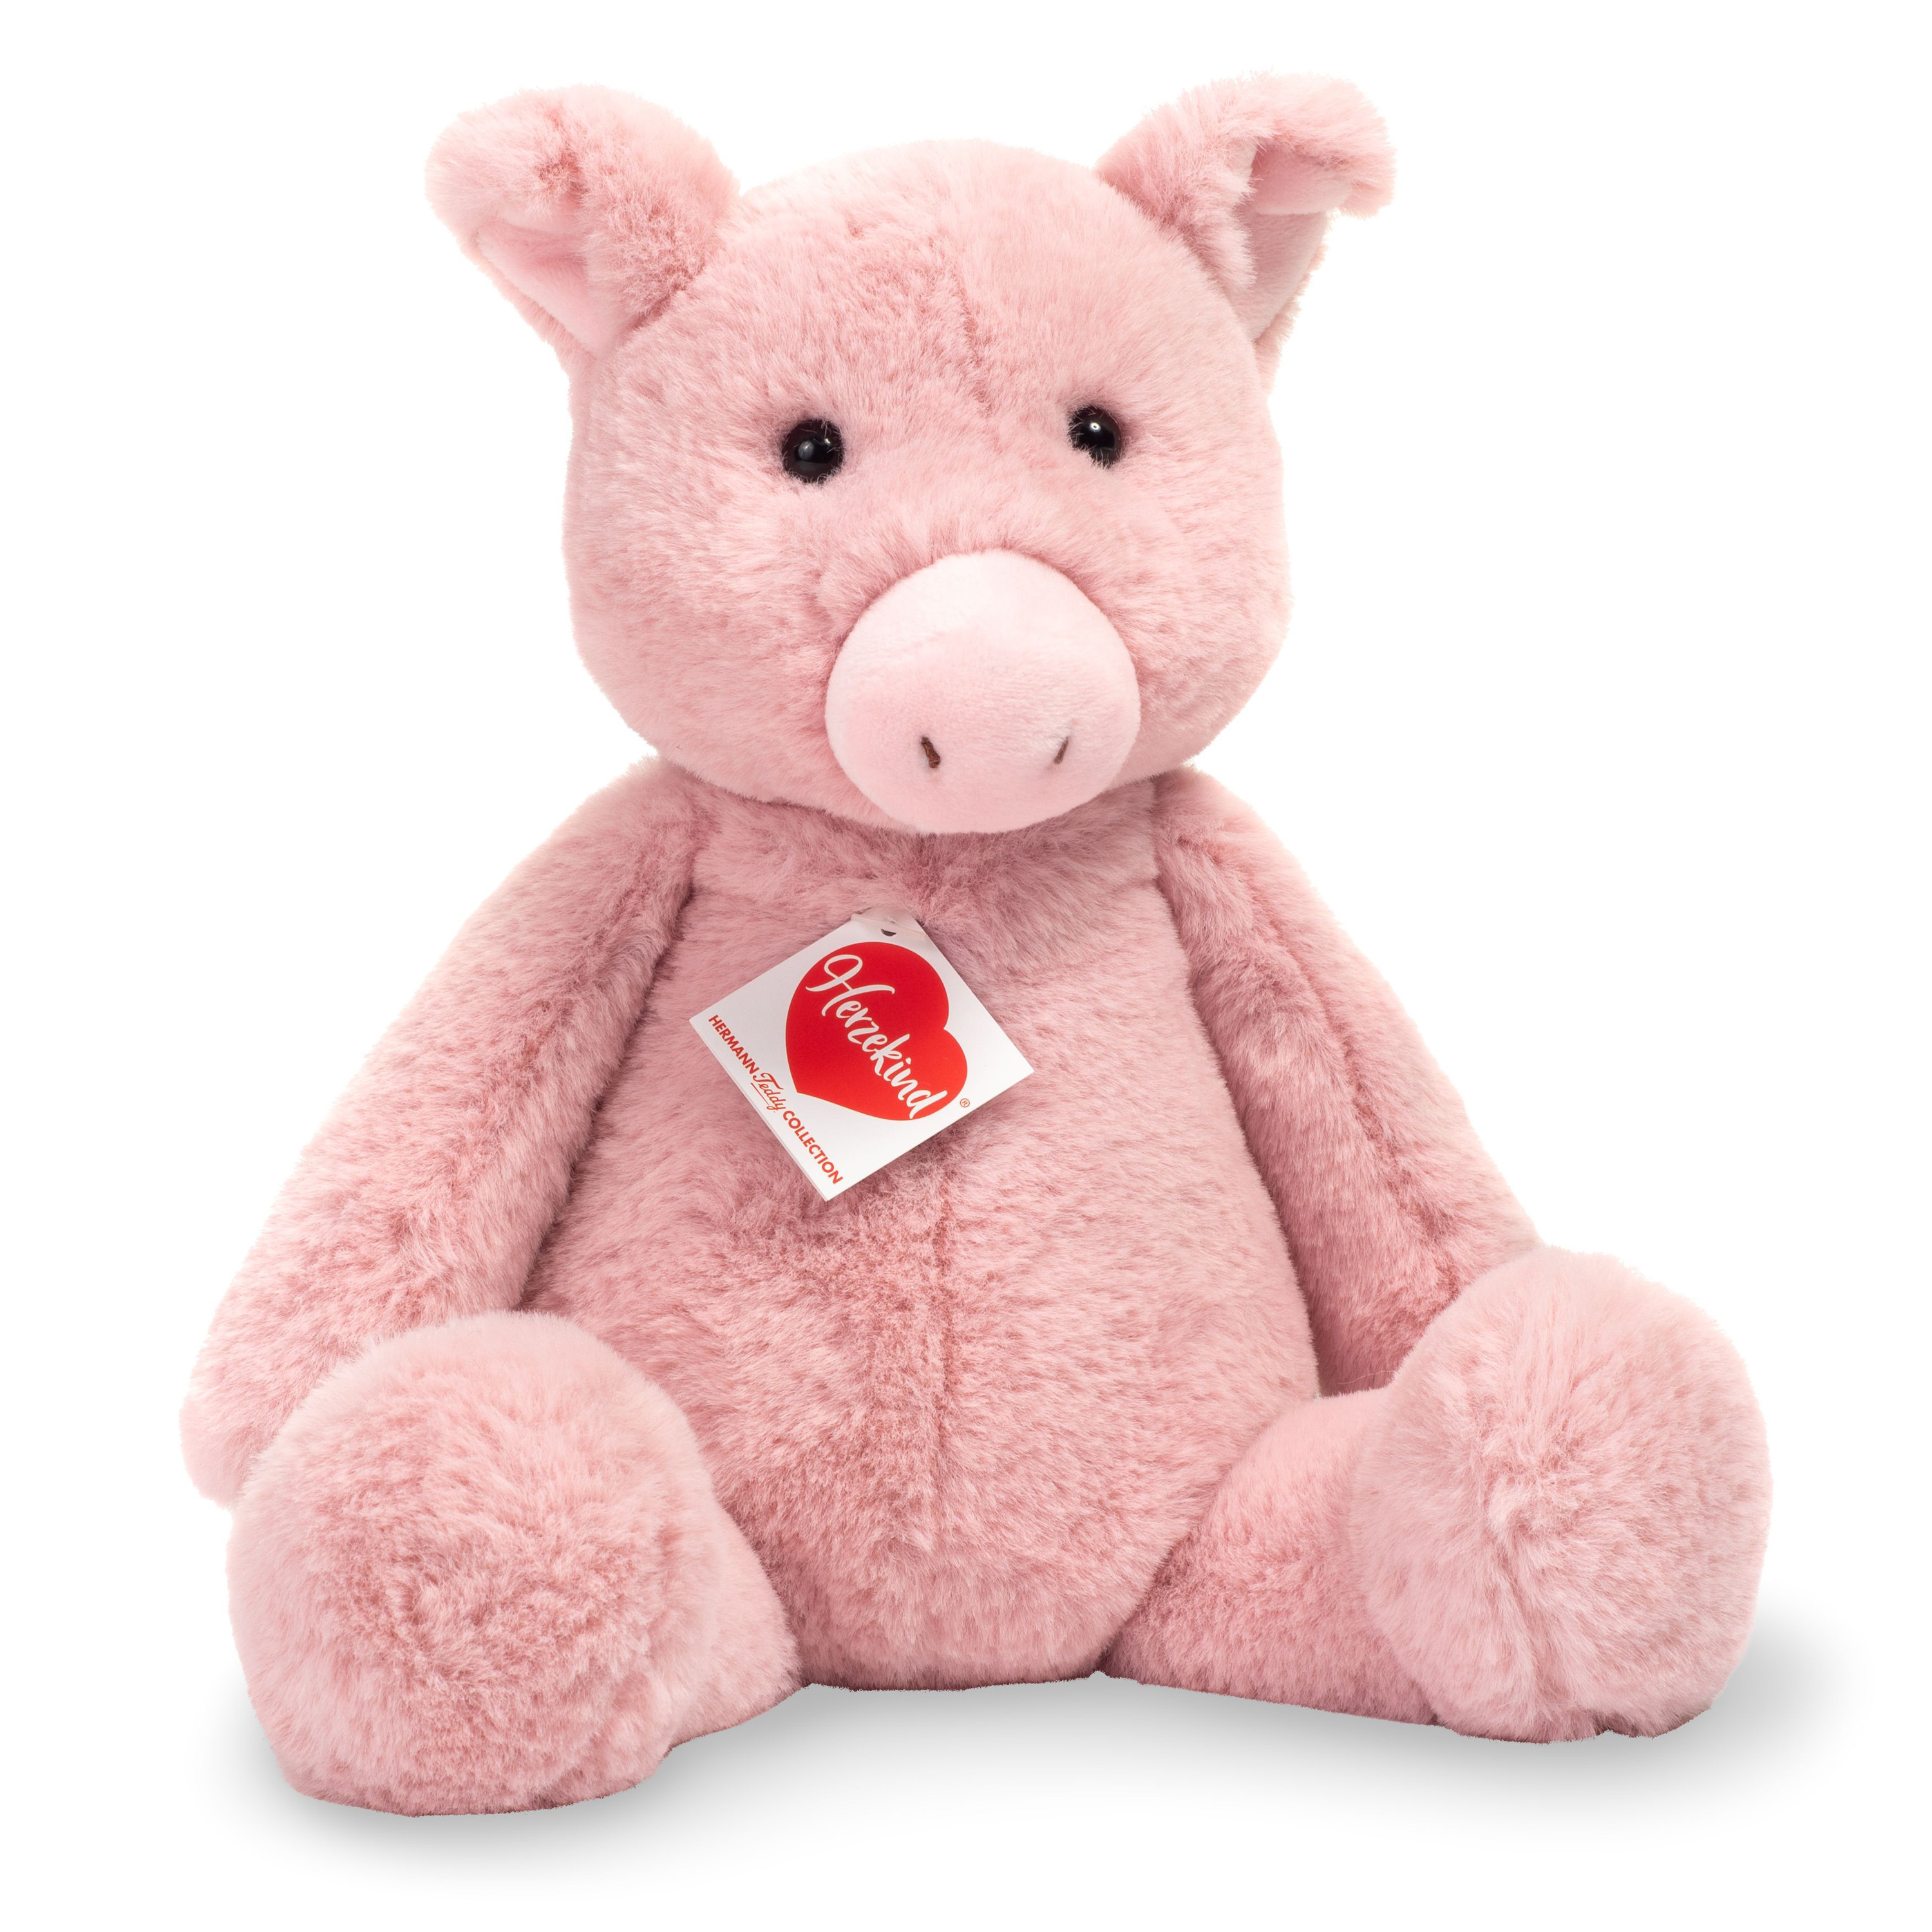 Knuffeldier varken-biggetje zachte pluche stof premium kwaliteit knuffels roze 32 cm